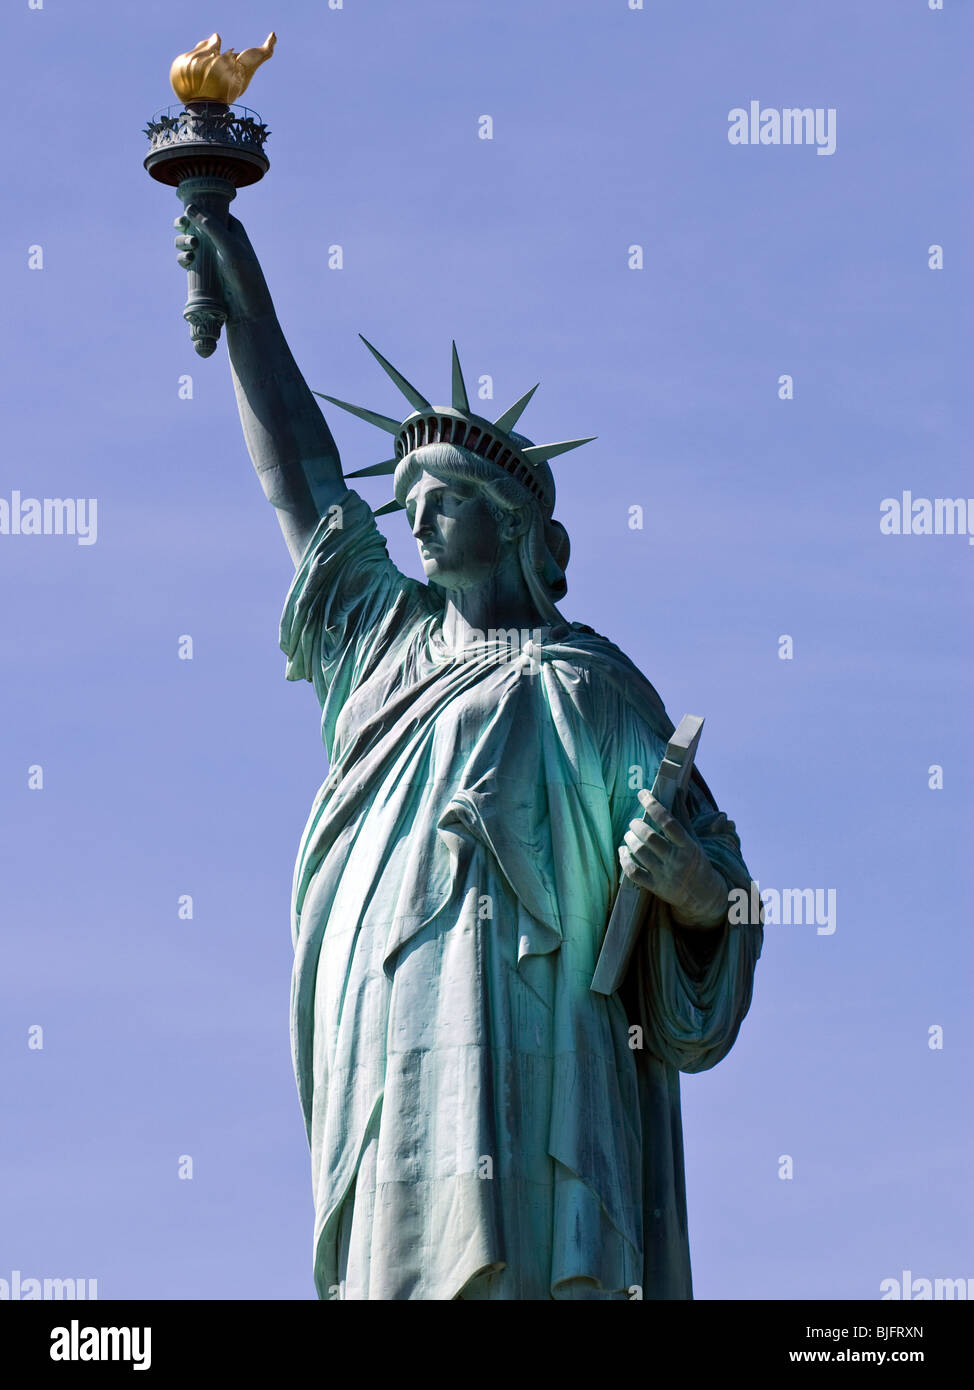 Statue of Liberty - New York - September 2009 Stock Photo